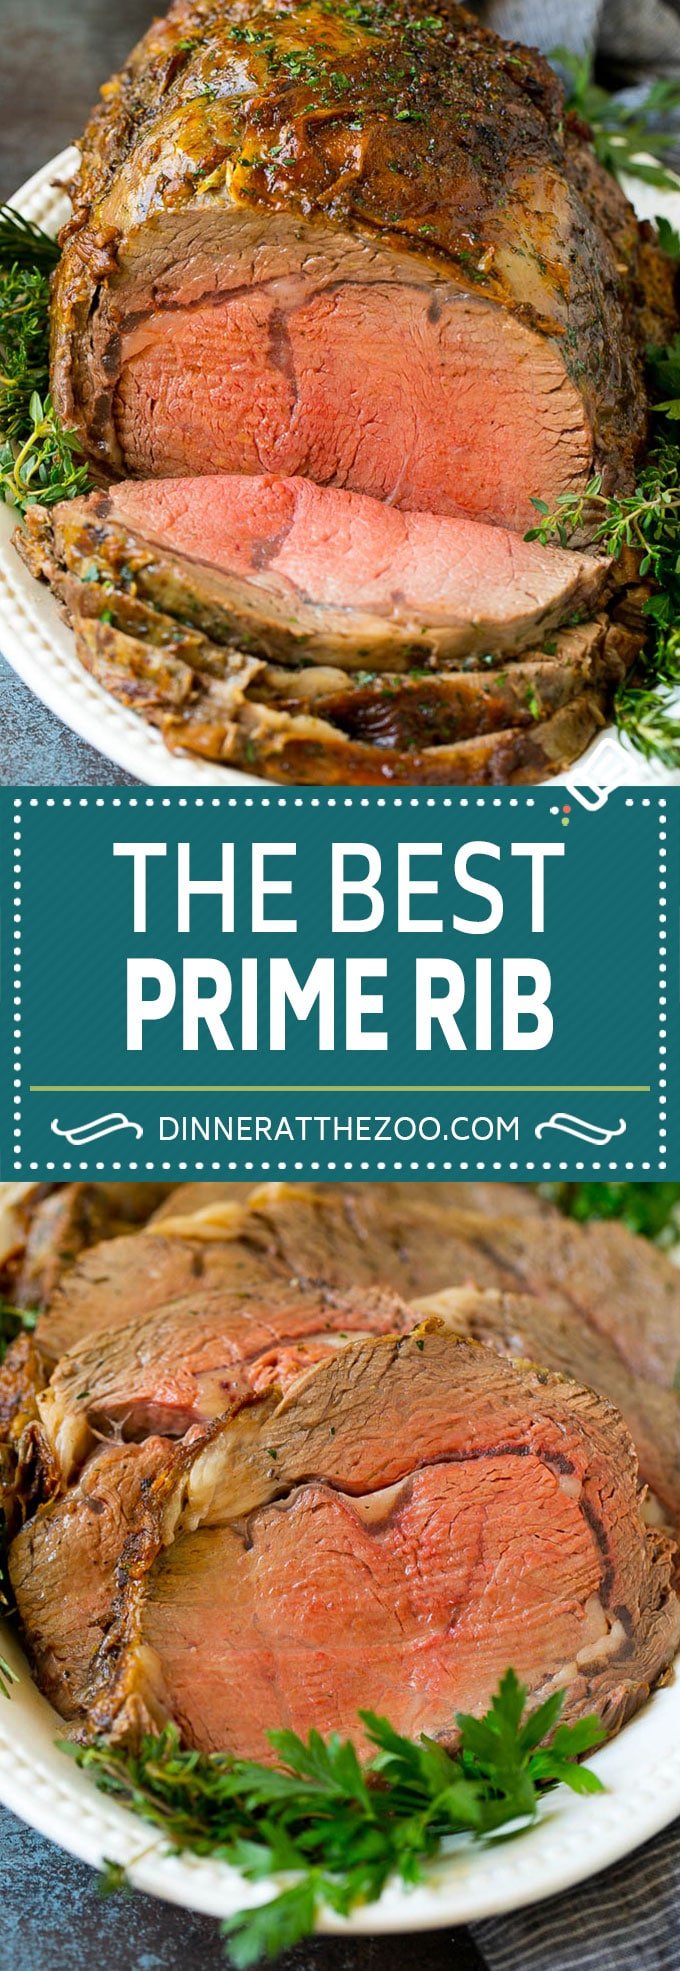 Prime Rib Recipe #primerib #beef #roast #dinner #thanksgiving #christmas #keto #lowcarb #dinneratthezoo